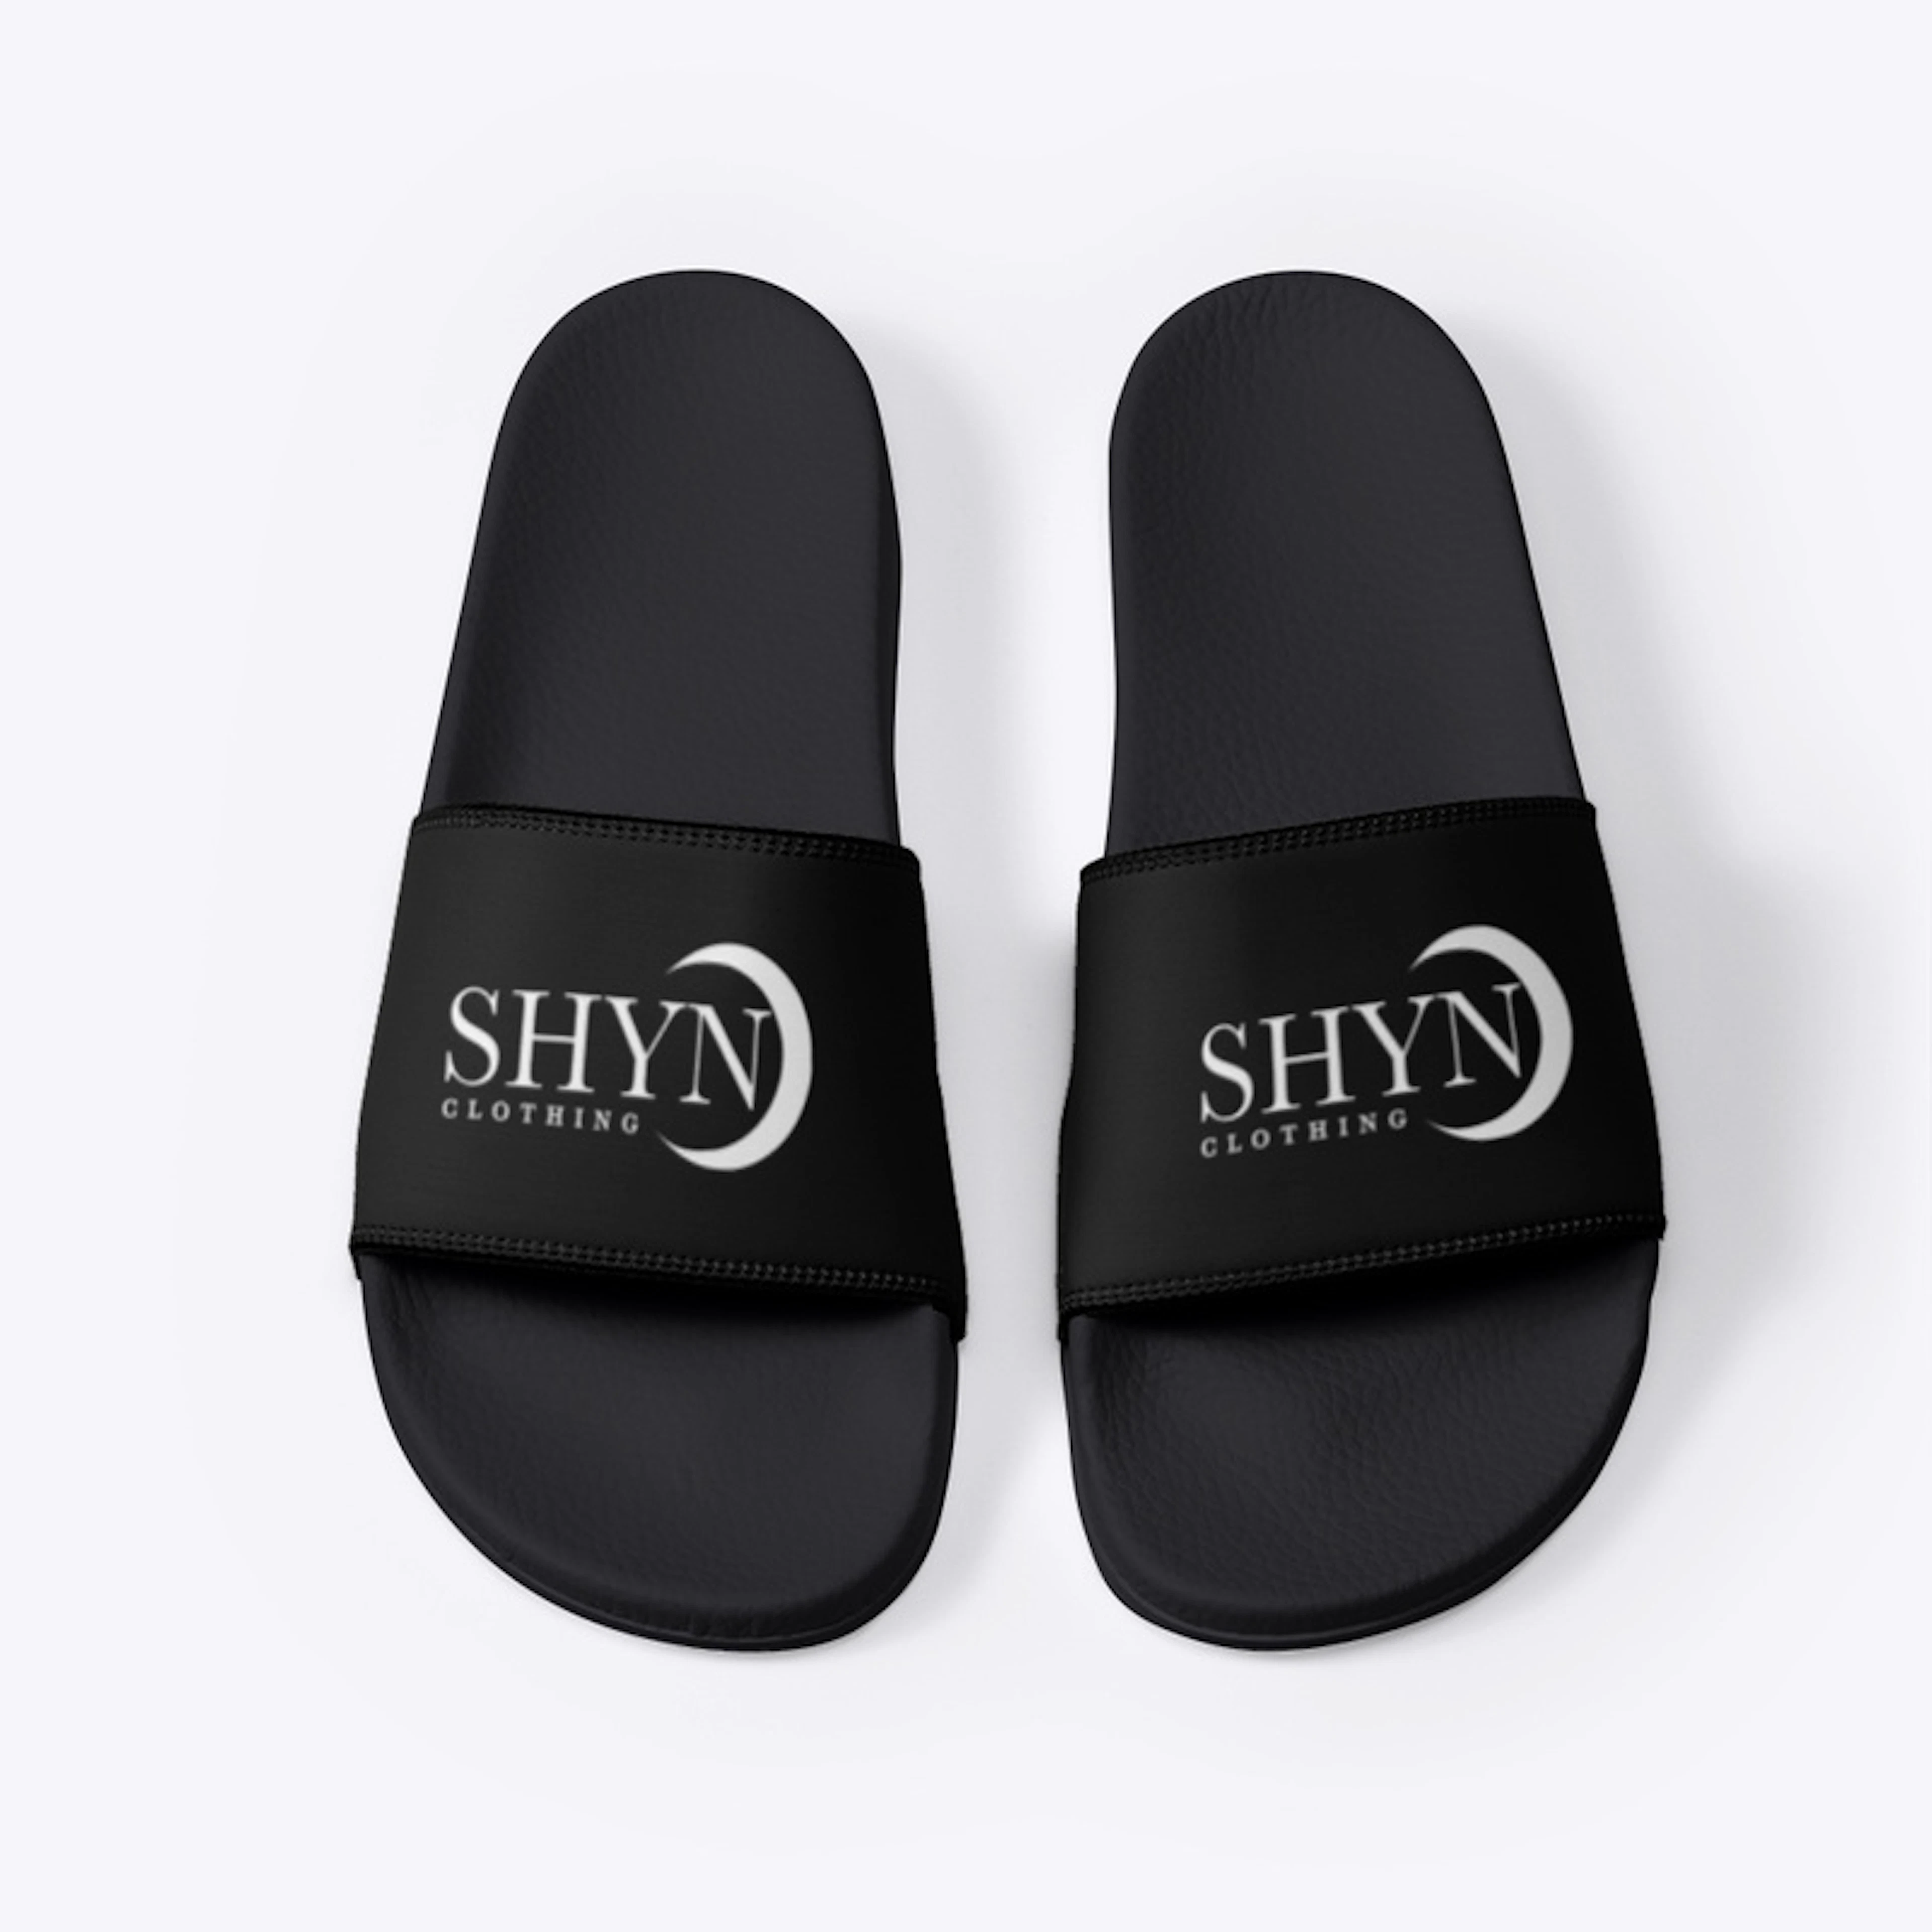 Shyn Clothing Slides 